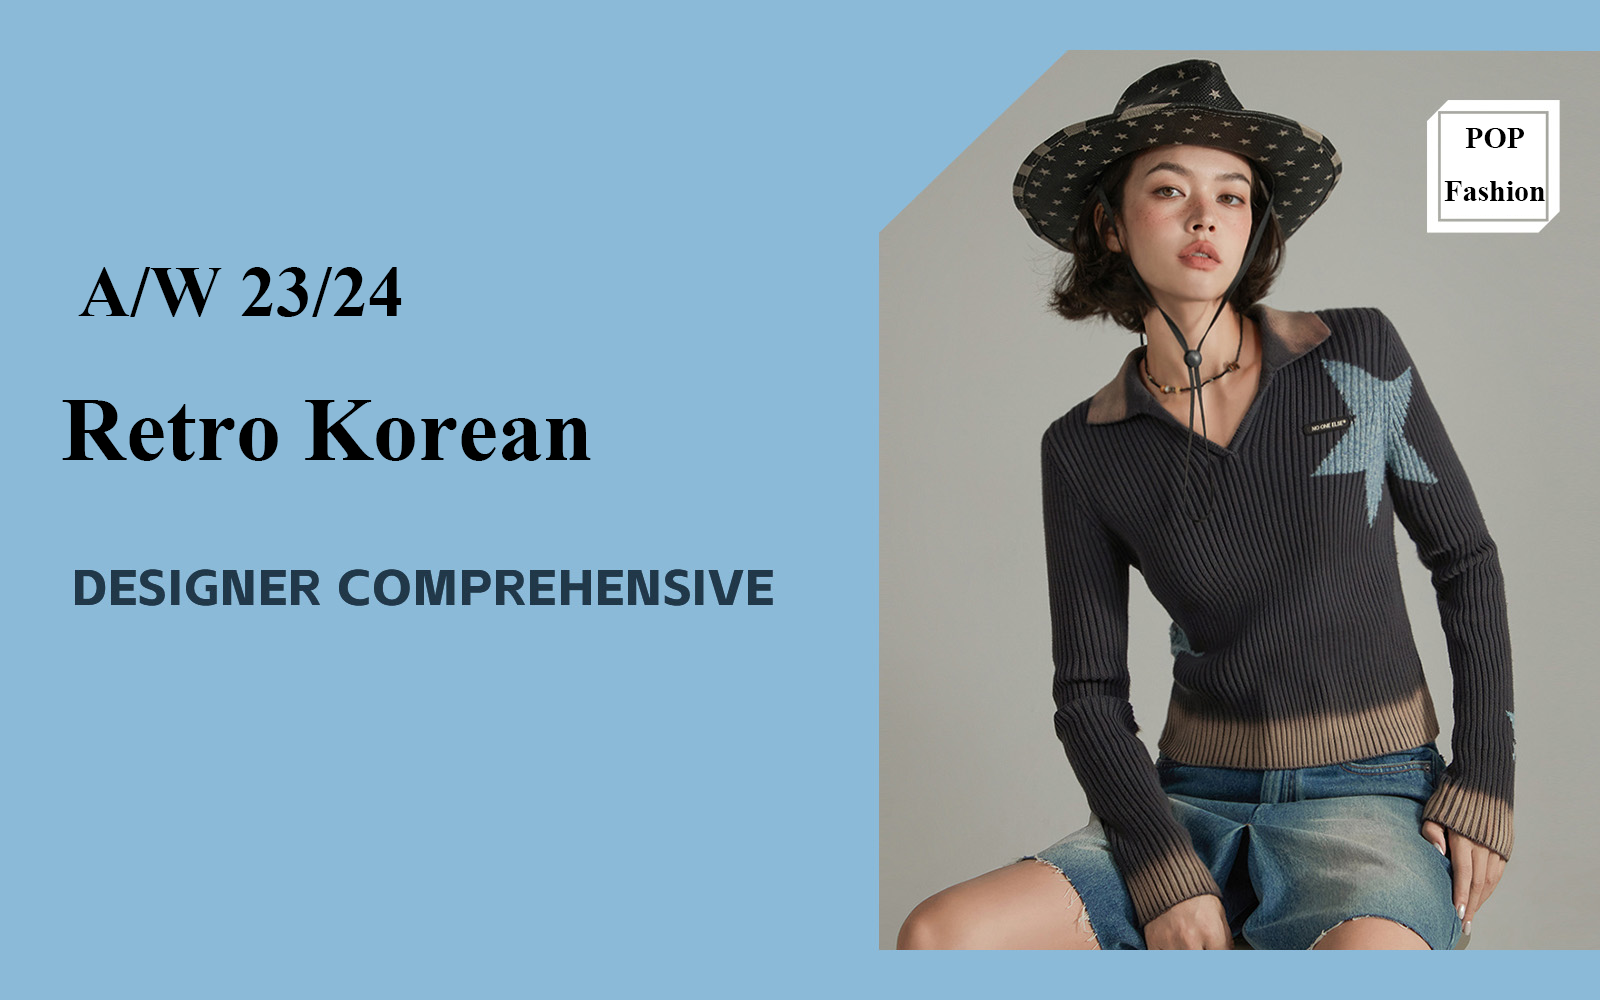 The Analysis of Korean Womenswear Designer Brand